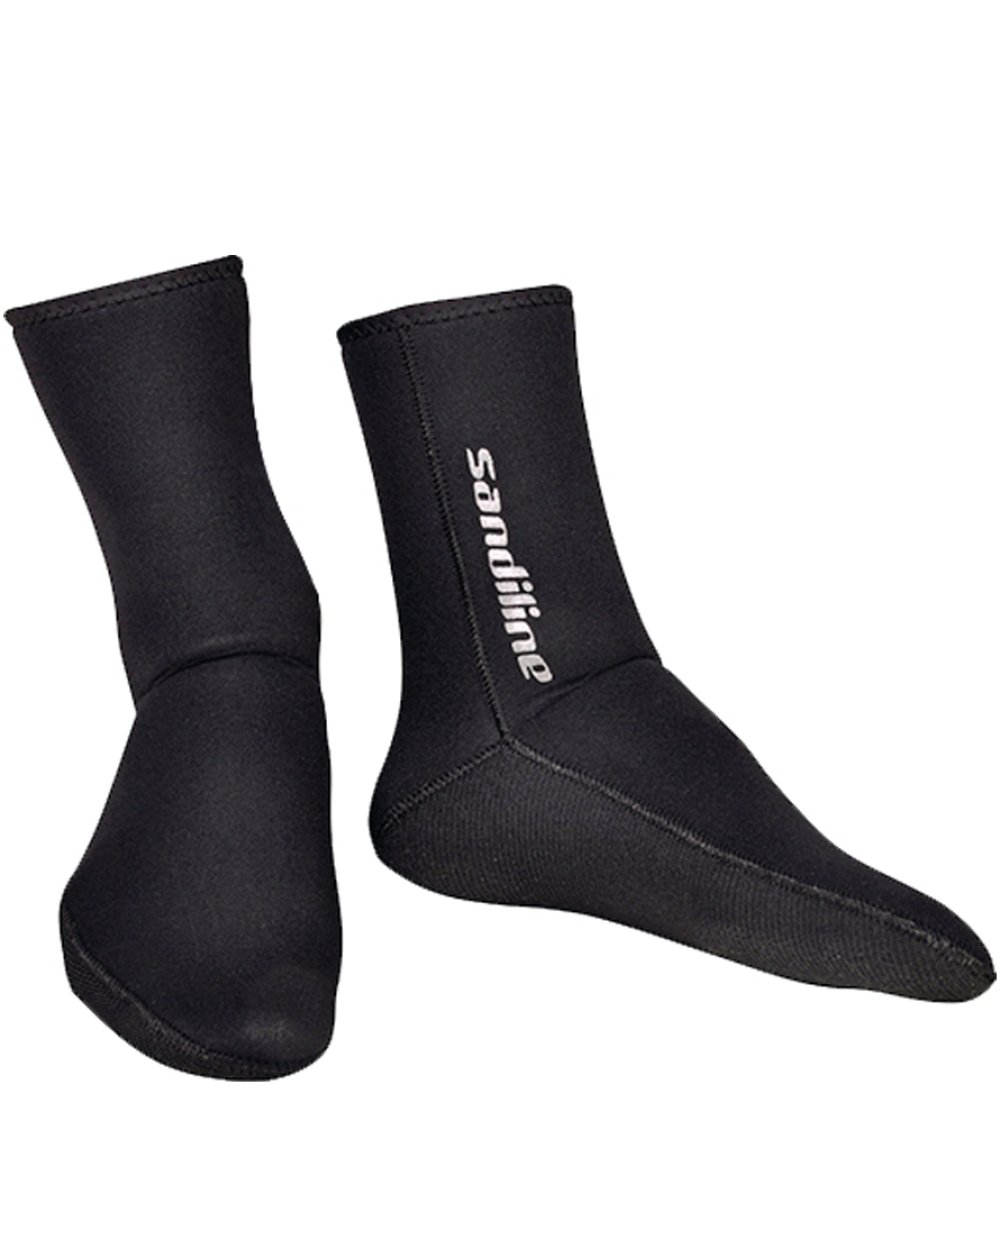 SANDILINE Socks Splash 30 - Gr. 44/45